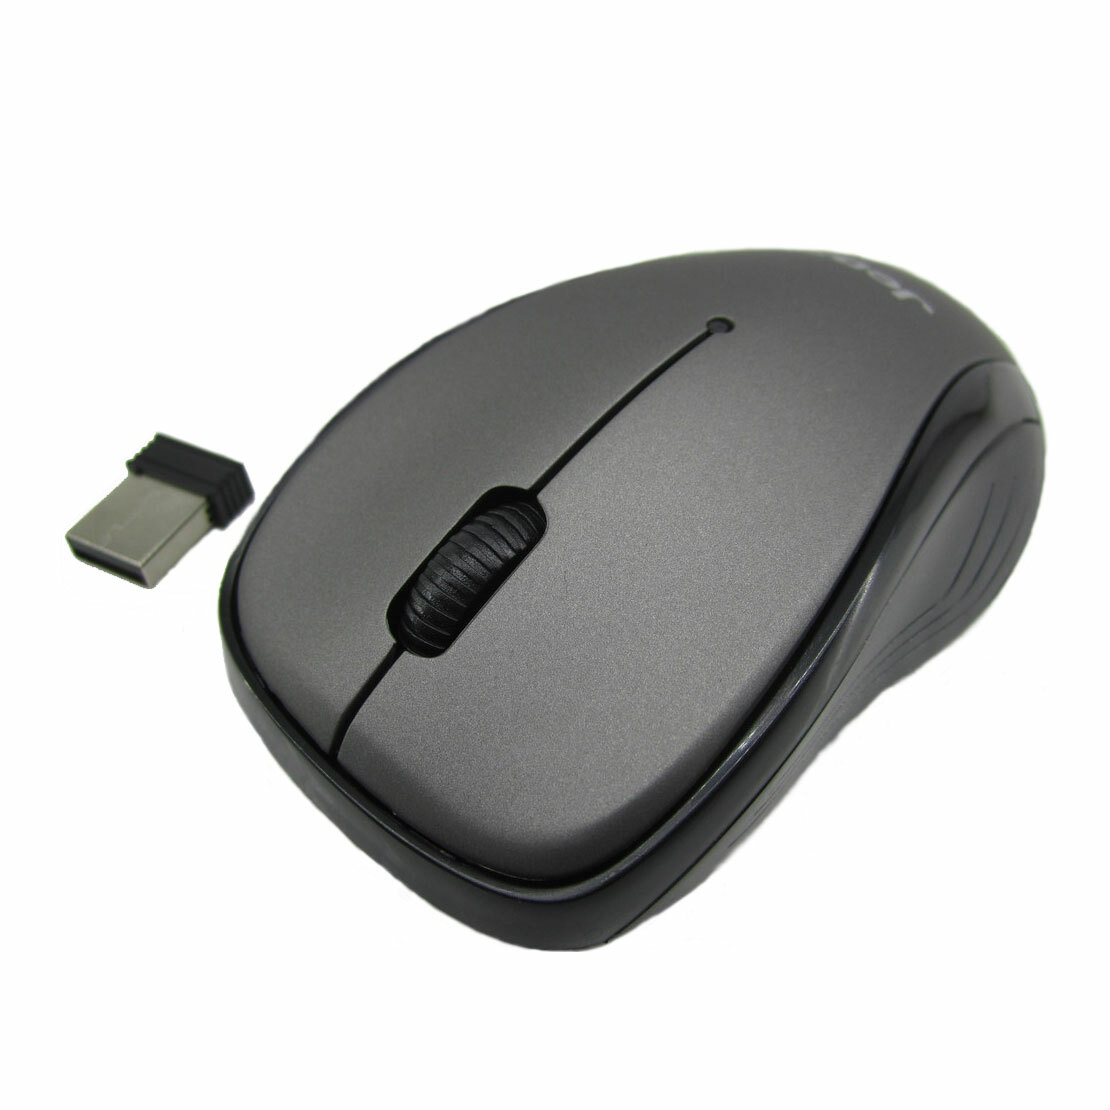 JEDEL W920-SB W920 Wireless 3 Button Mouse with Scroll Wheel 1600dpi 2 ...